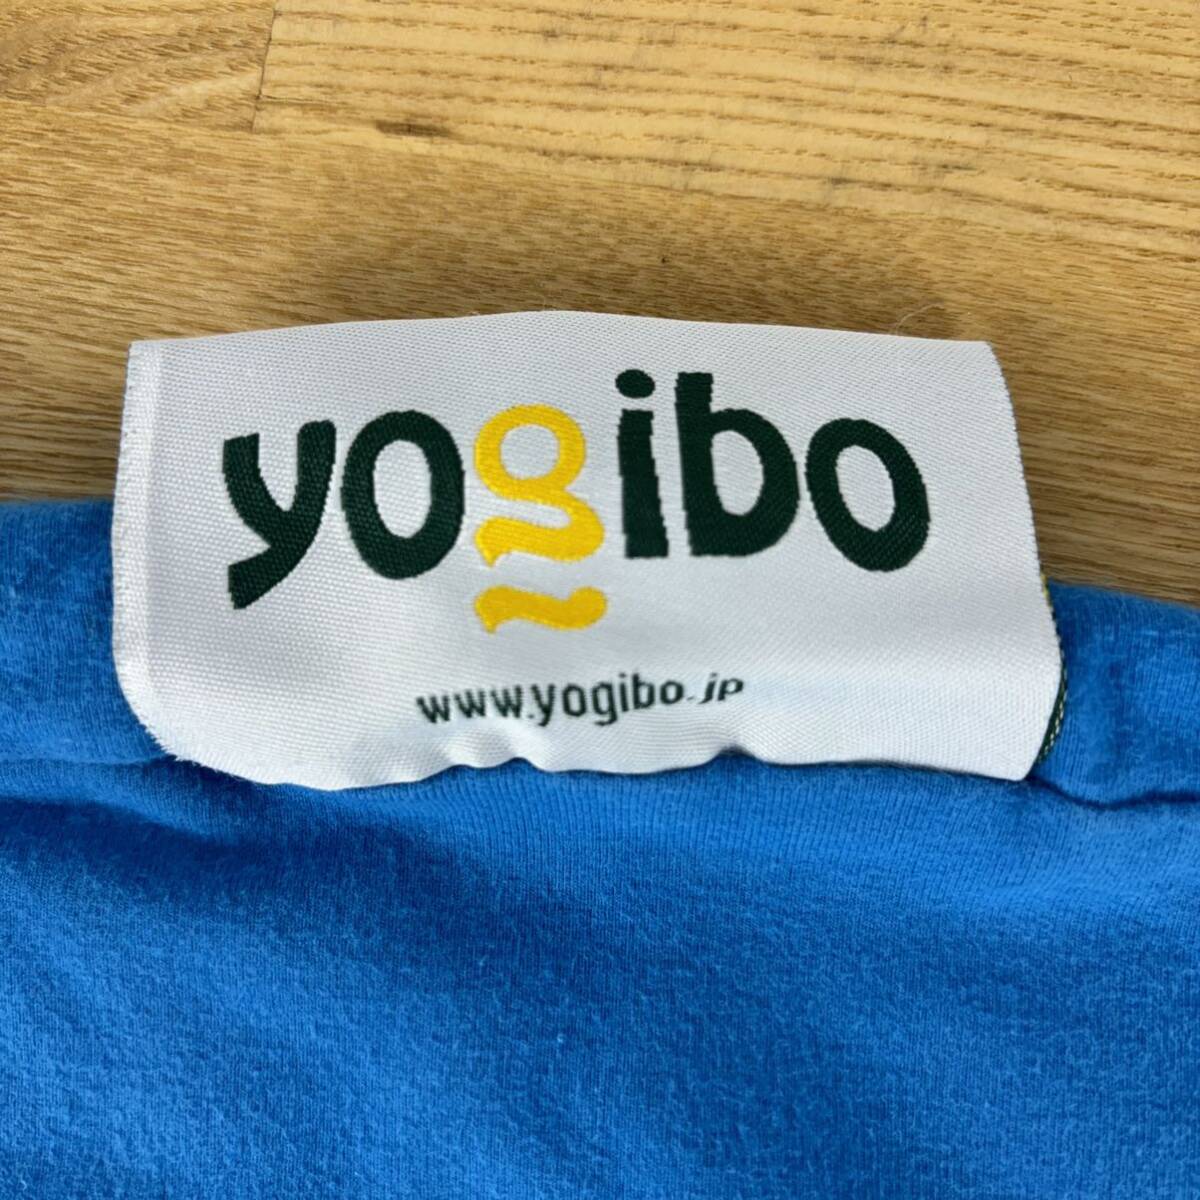 ec409 新品 正規品 Yogibo ヨギボー ヨギボーバブル オレンジ ブルー カバーのみ クッション 大人気_画像3